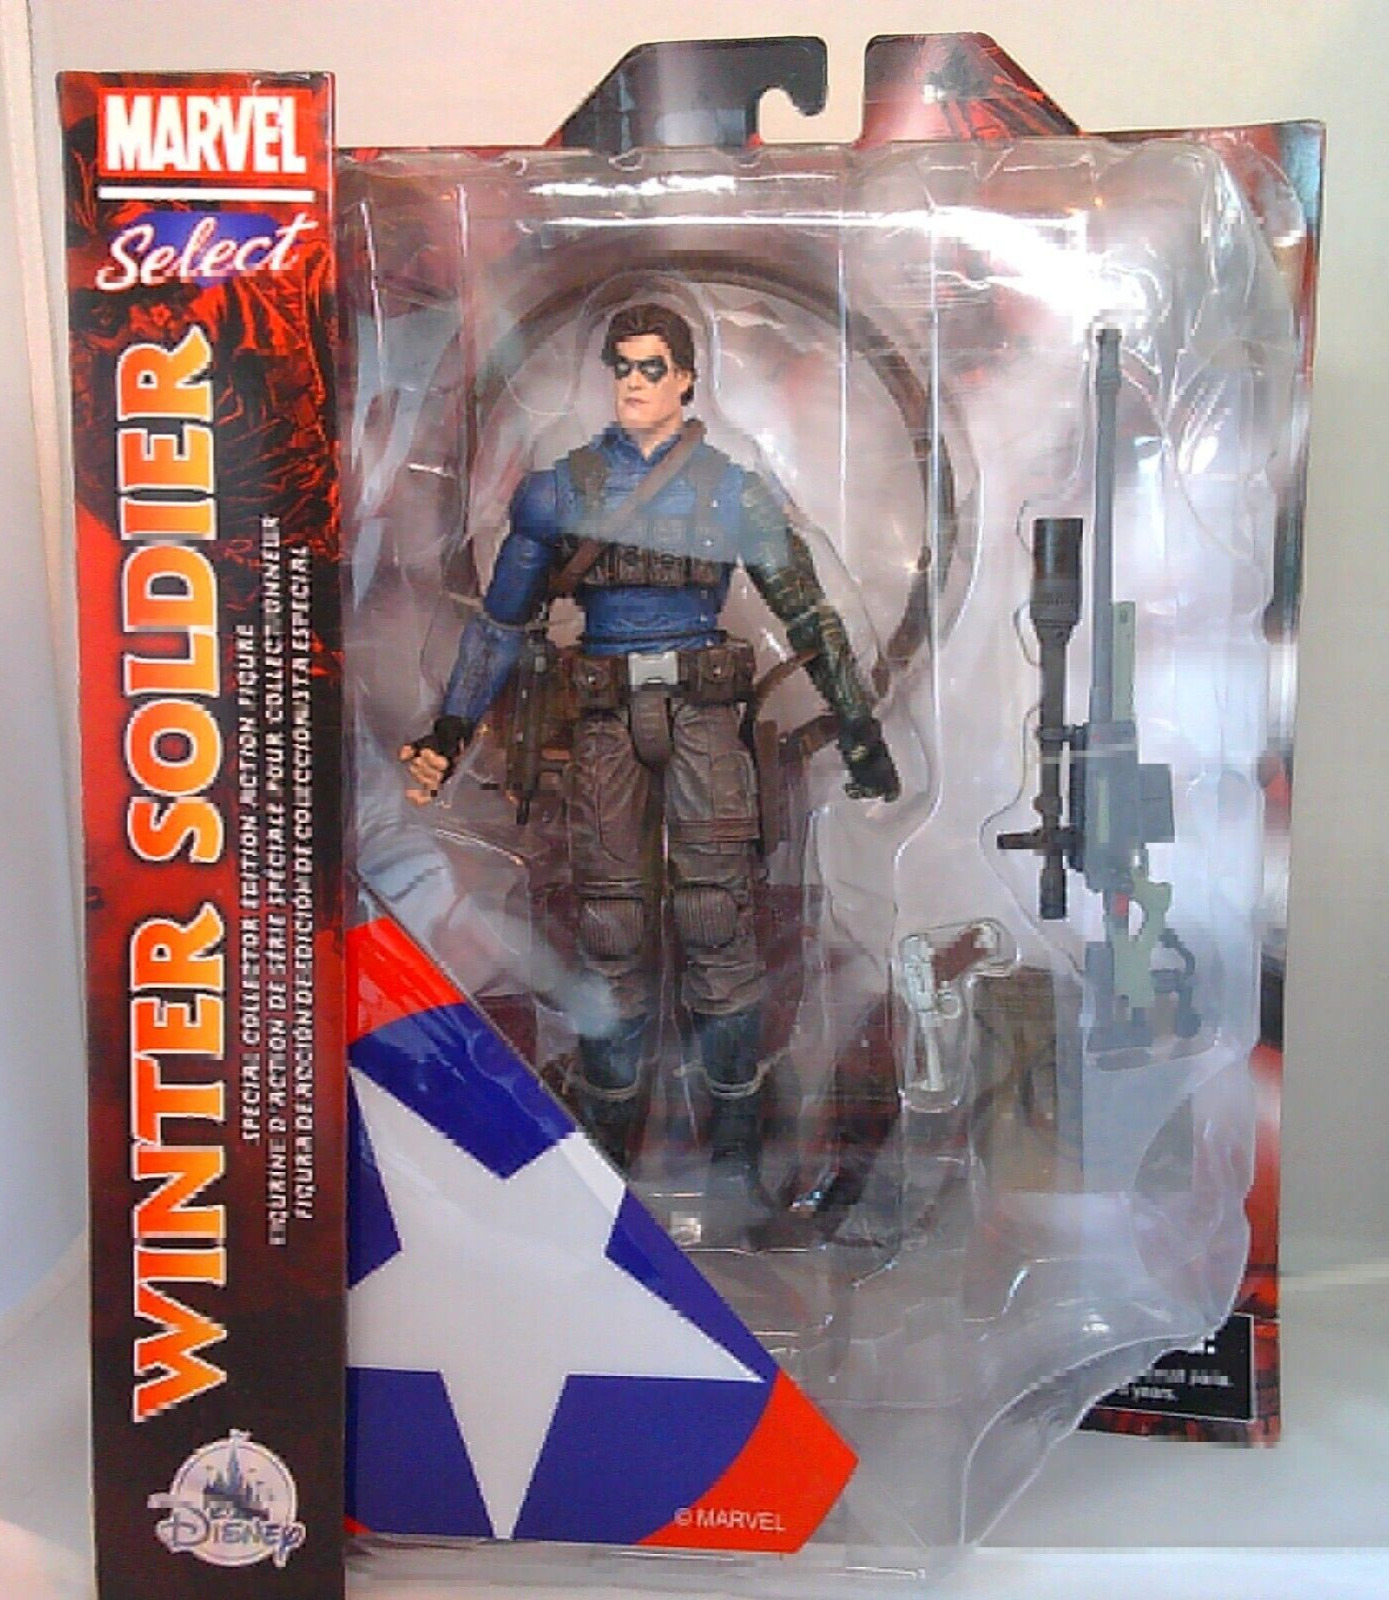  Marvel Winter Soldier 7" Action Figure Diamond Select Disney Store Exclusive